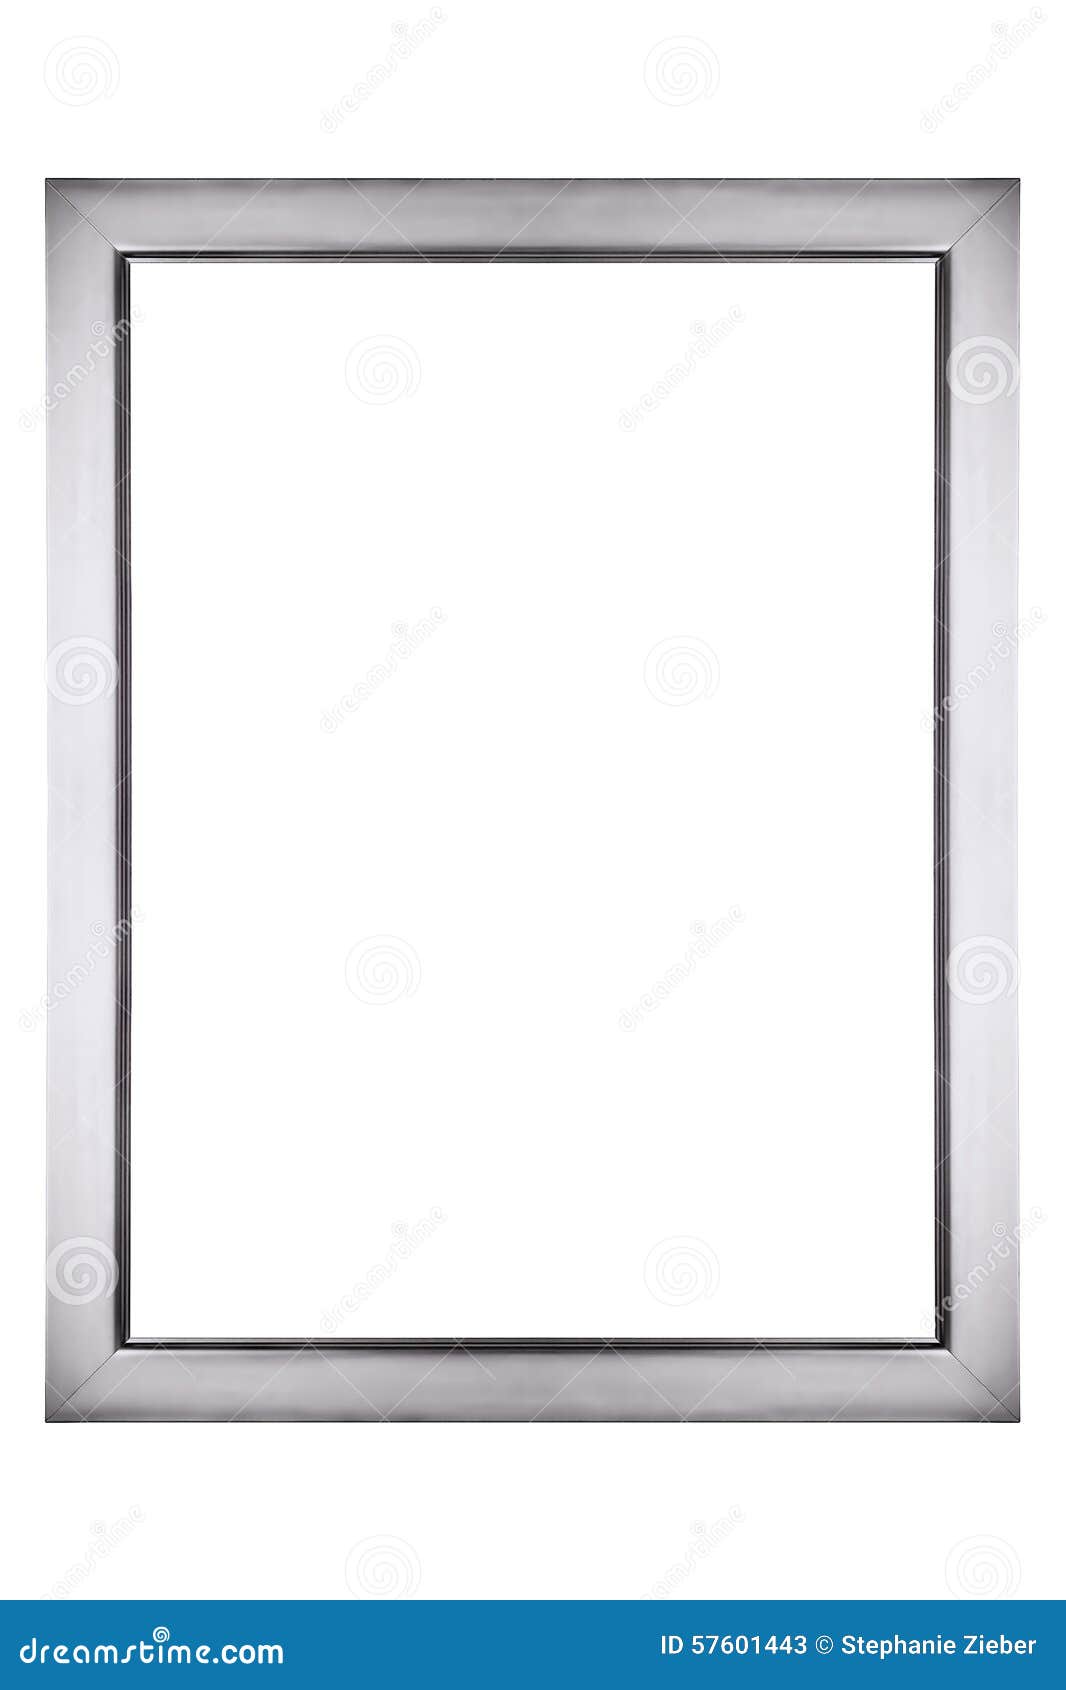 silver frame mirror